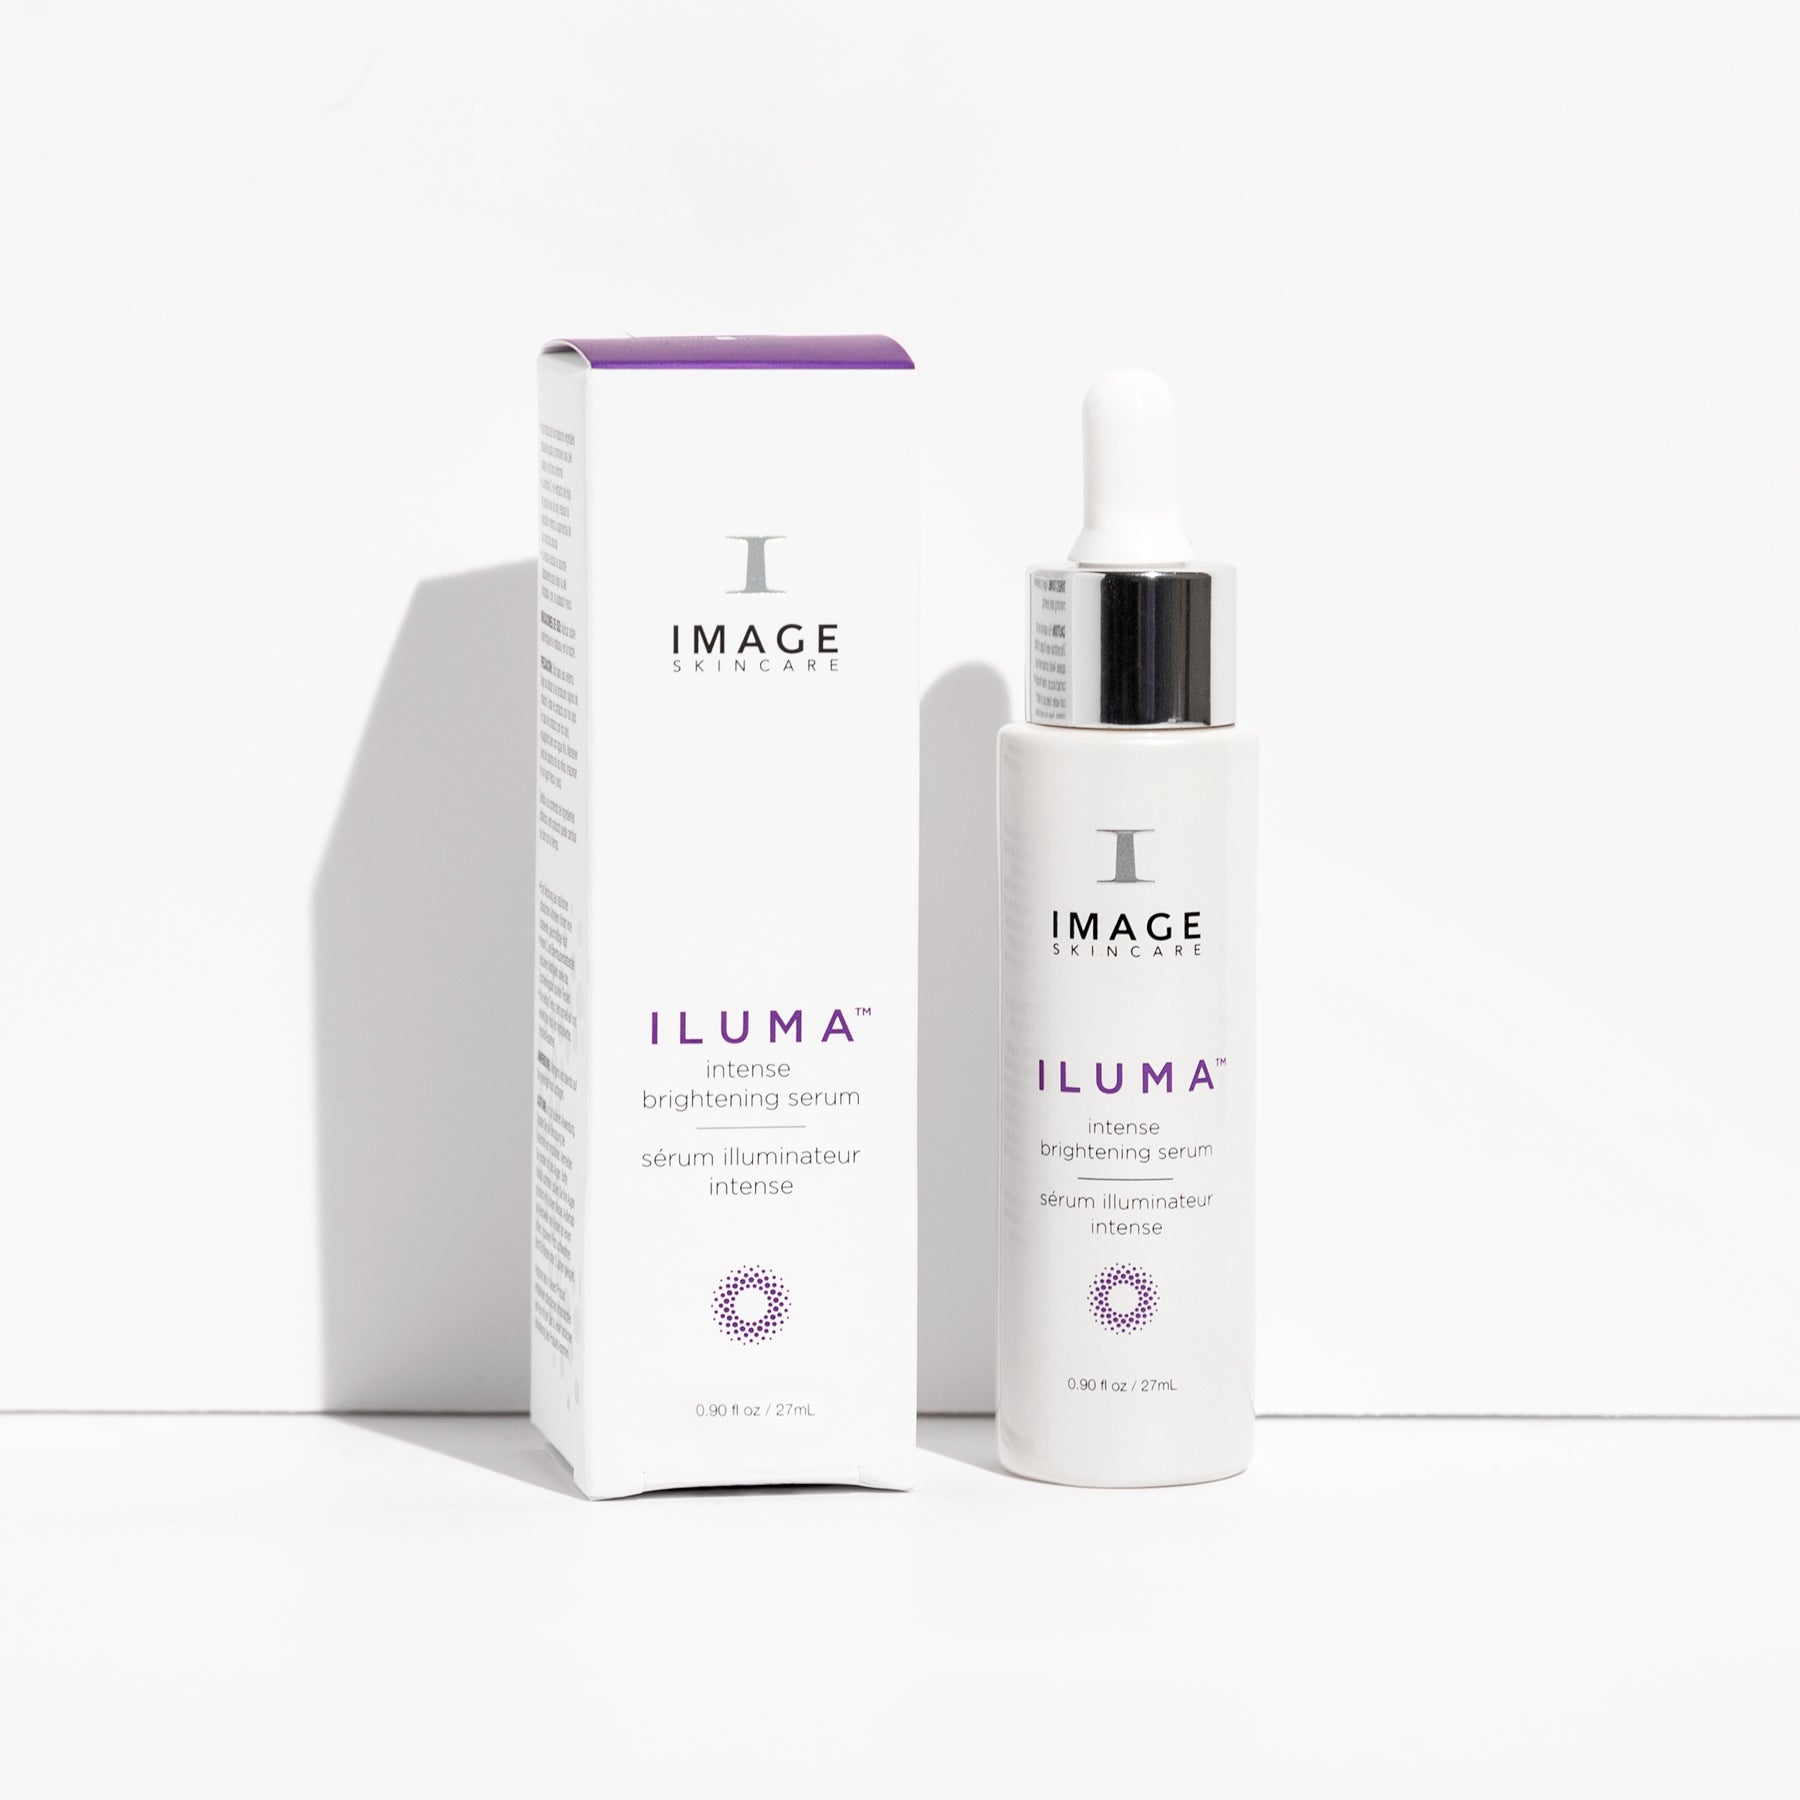 ILUMA® intense brightening serum | IMAGE Skincare